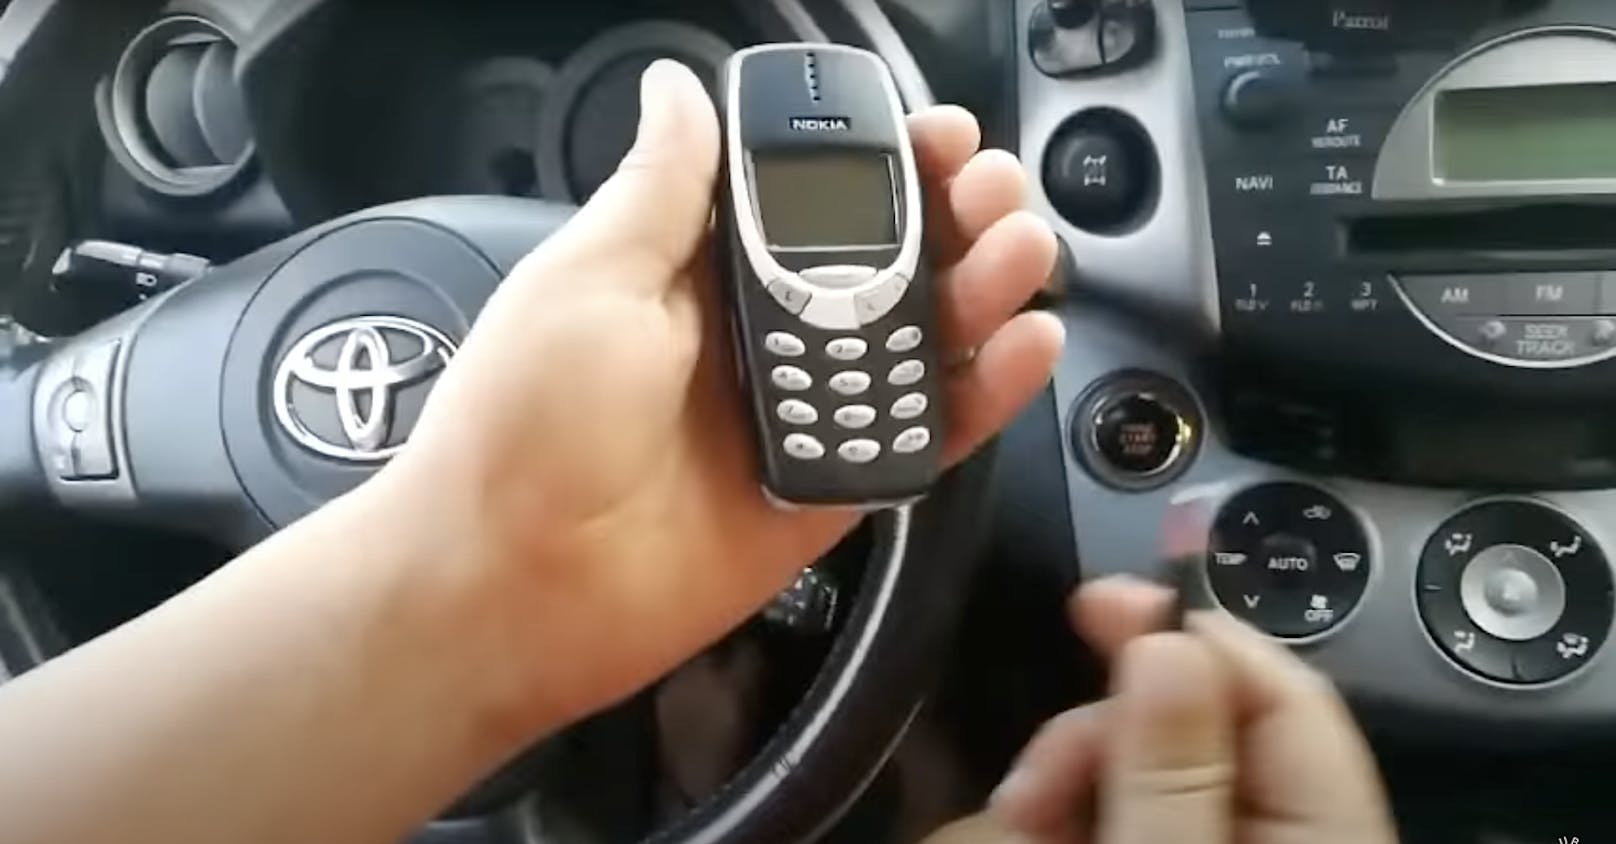 Uralt-Handys – damit knacken Kriminelle jetzt Autos